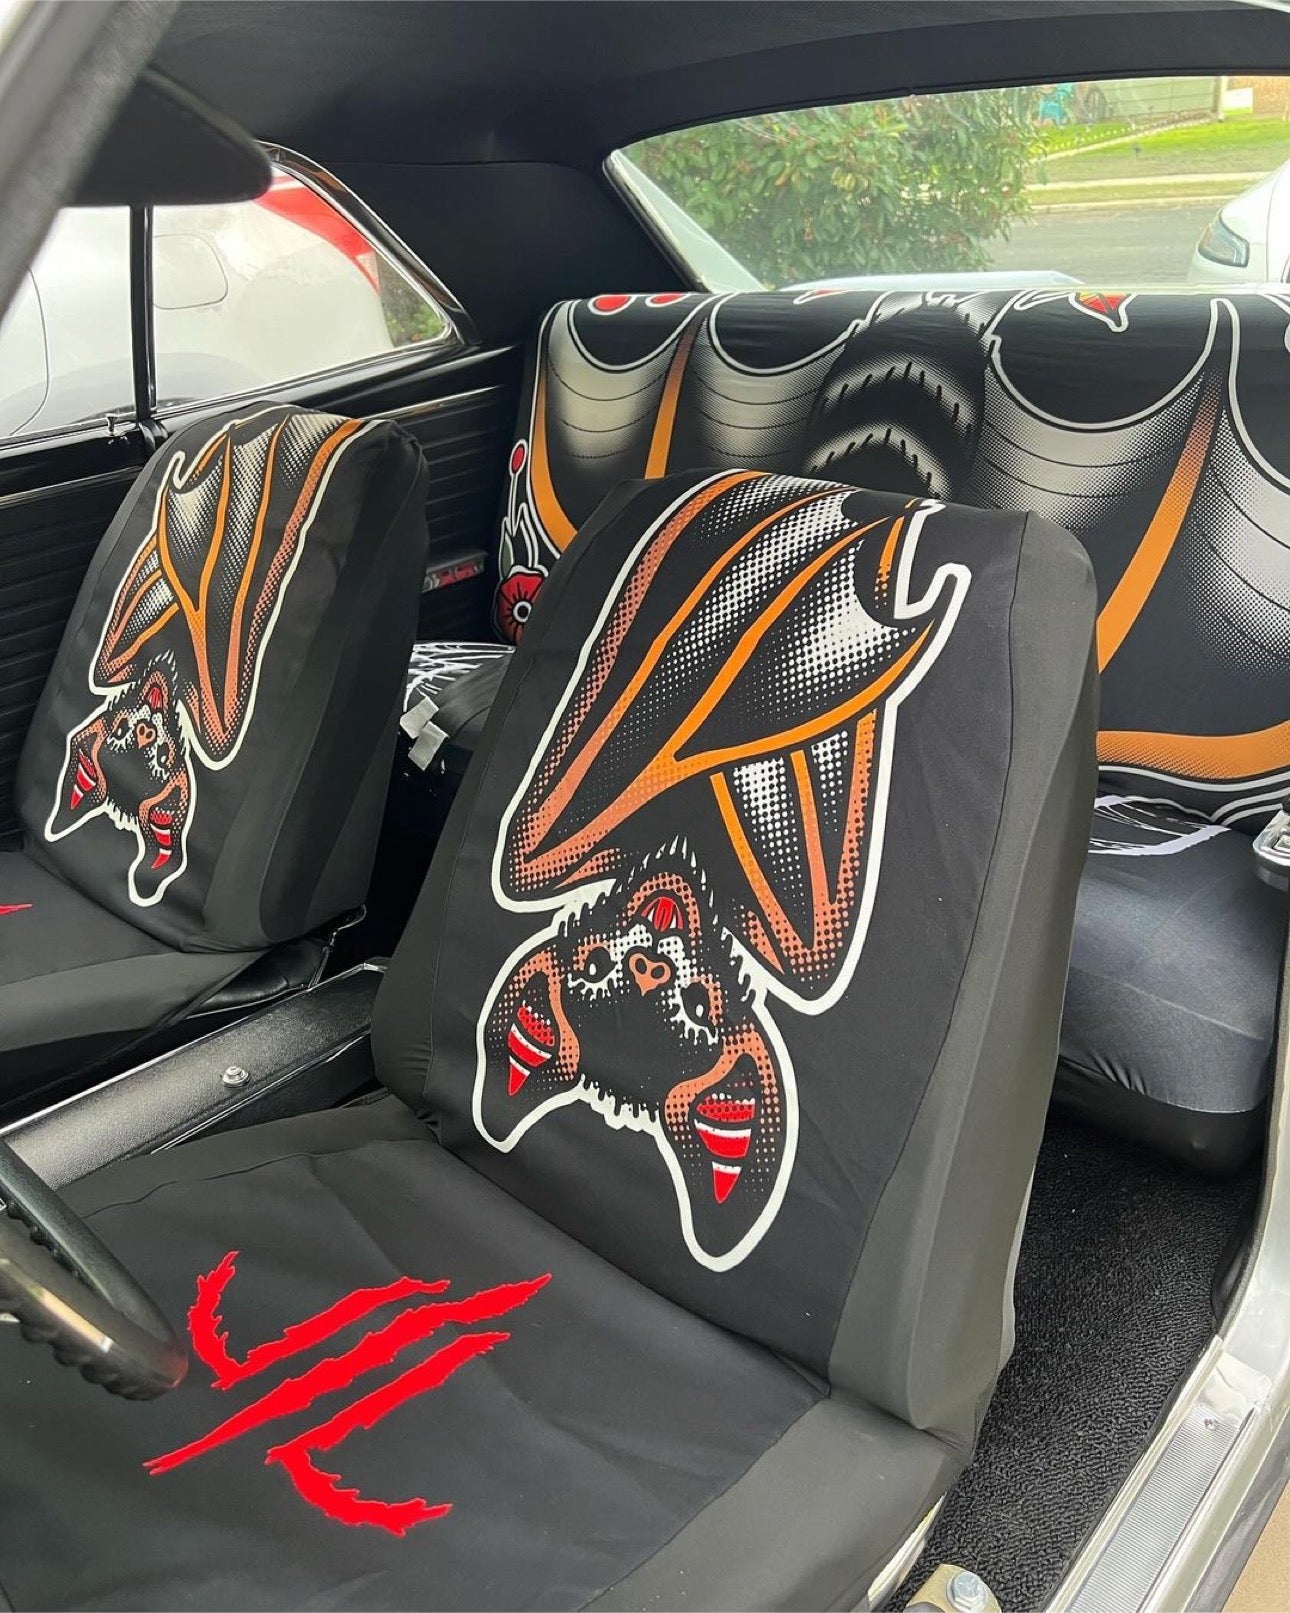 Hanging Bats Car Seat Covers (2 Pcs)